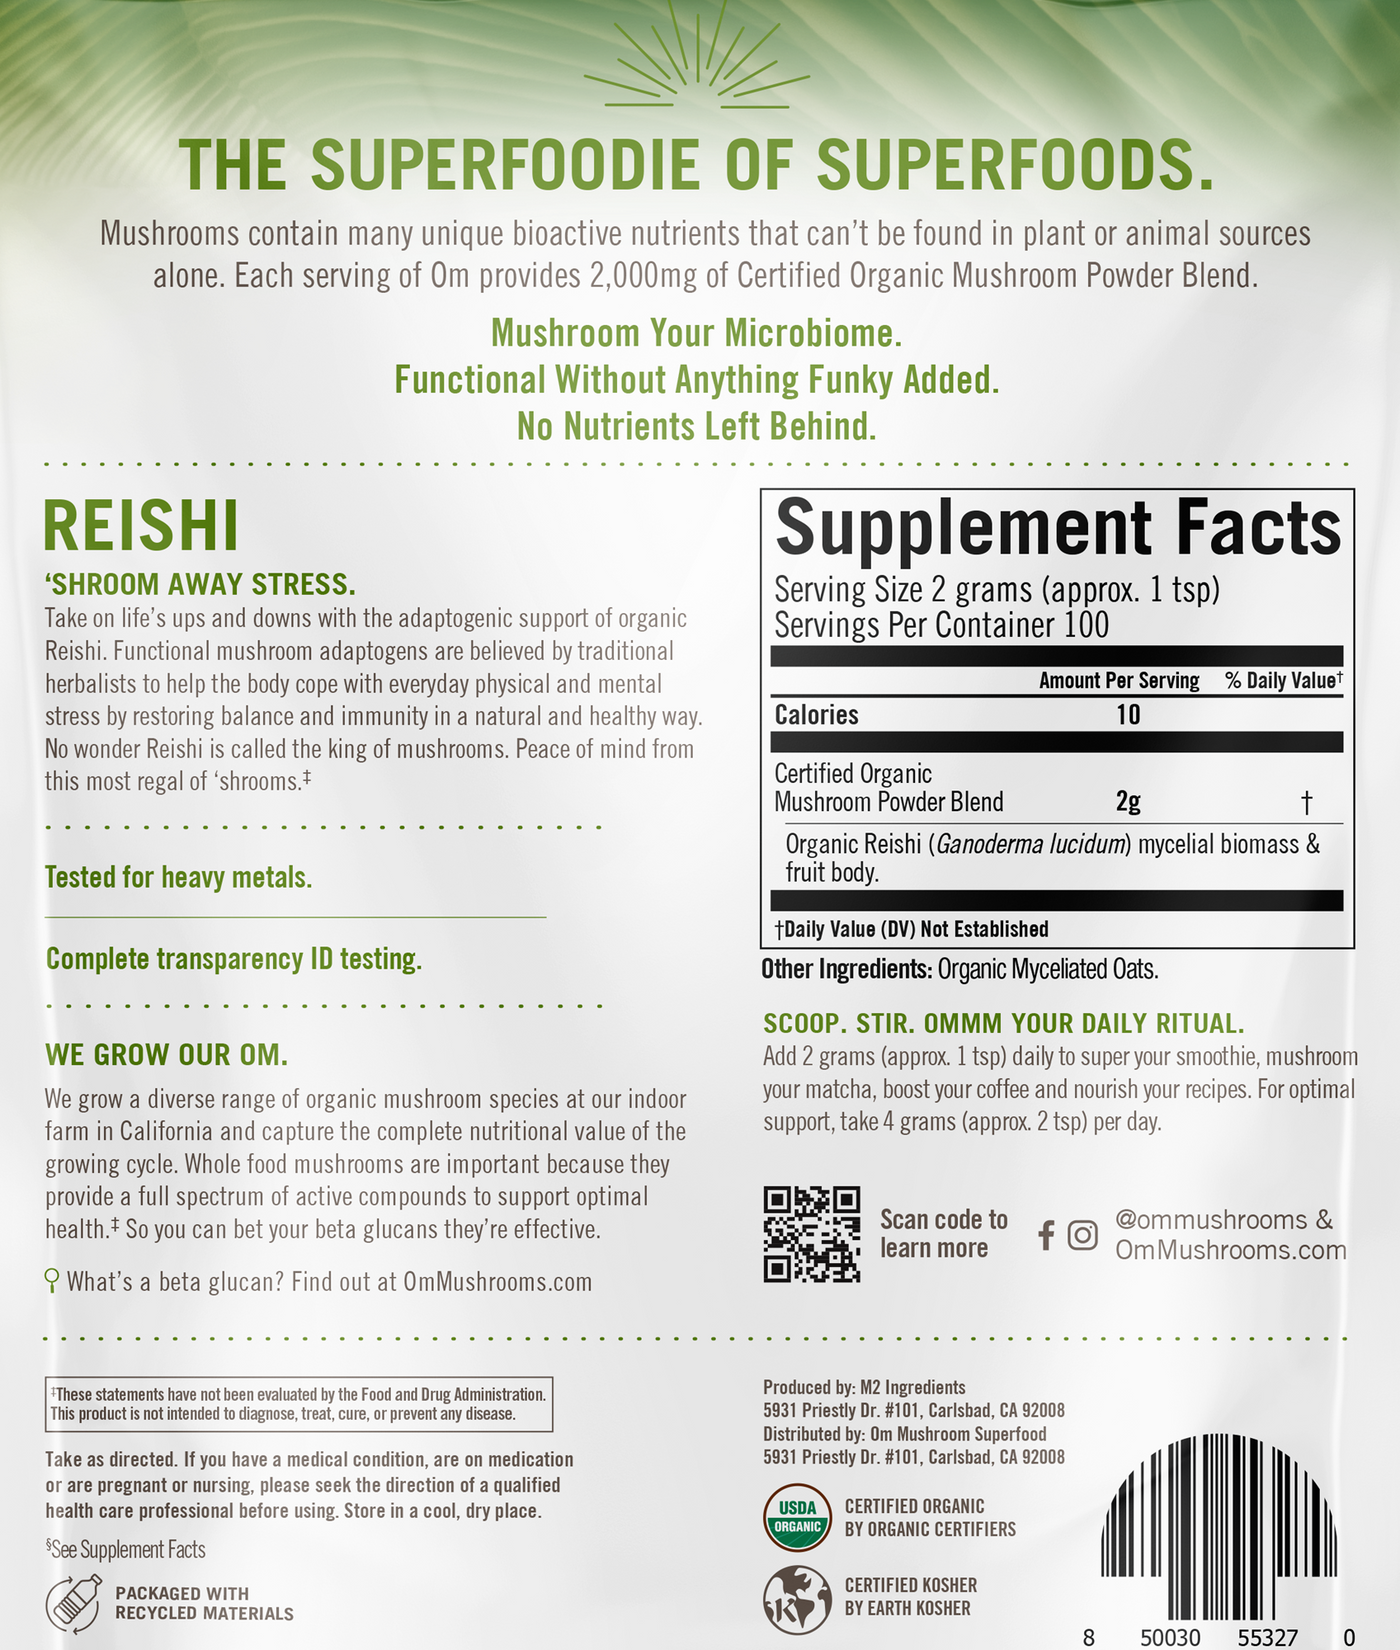 Reishi Mushroom Superfood Powder 200g Curated Wellness